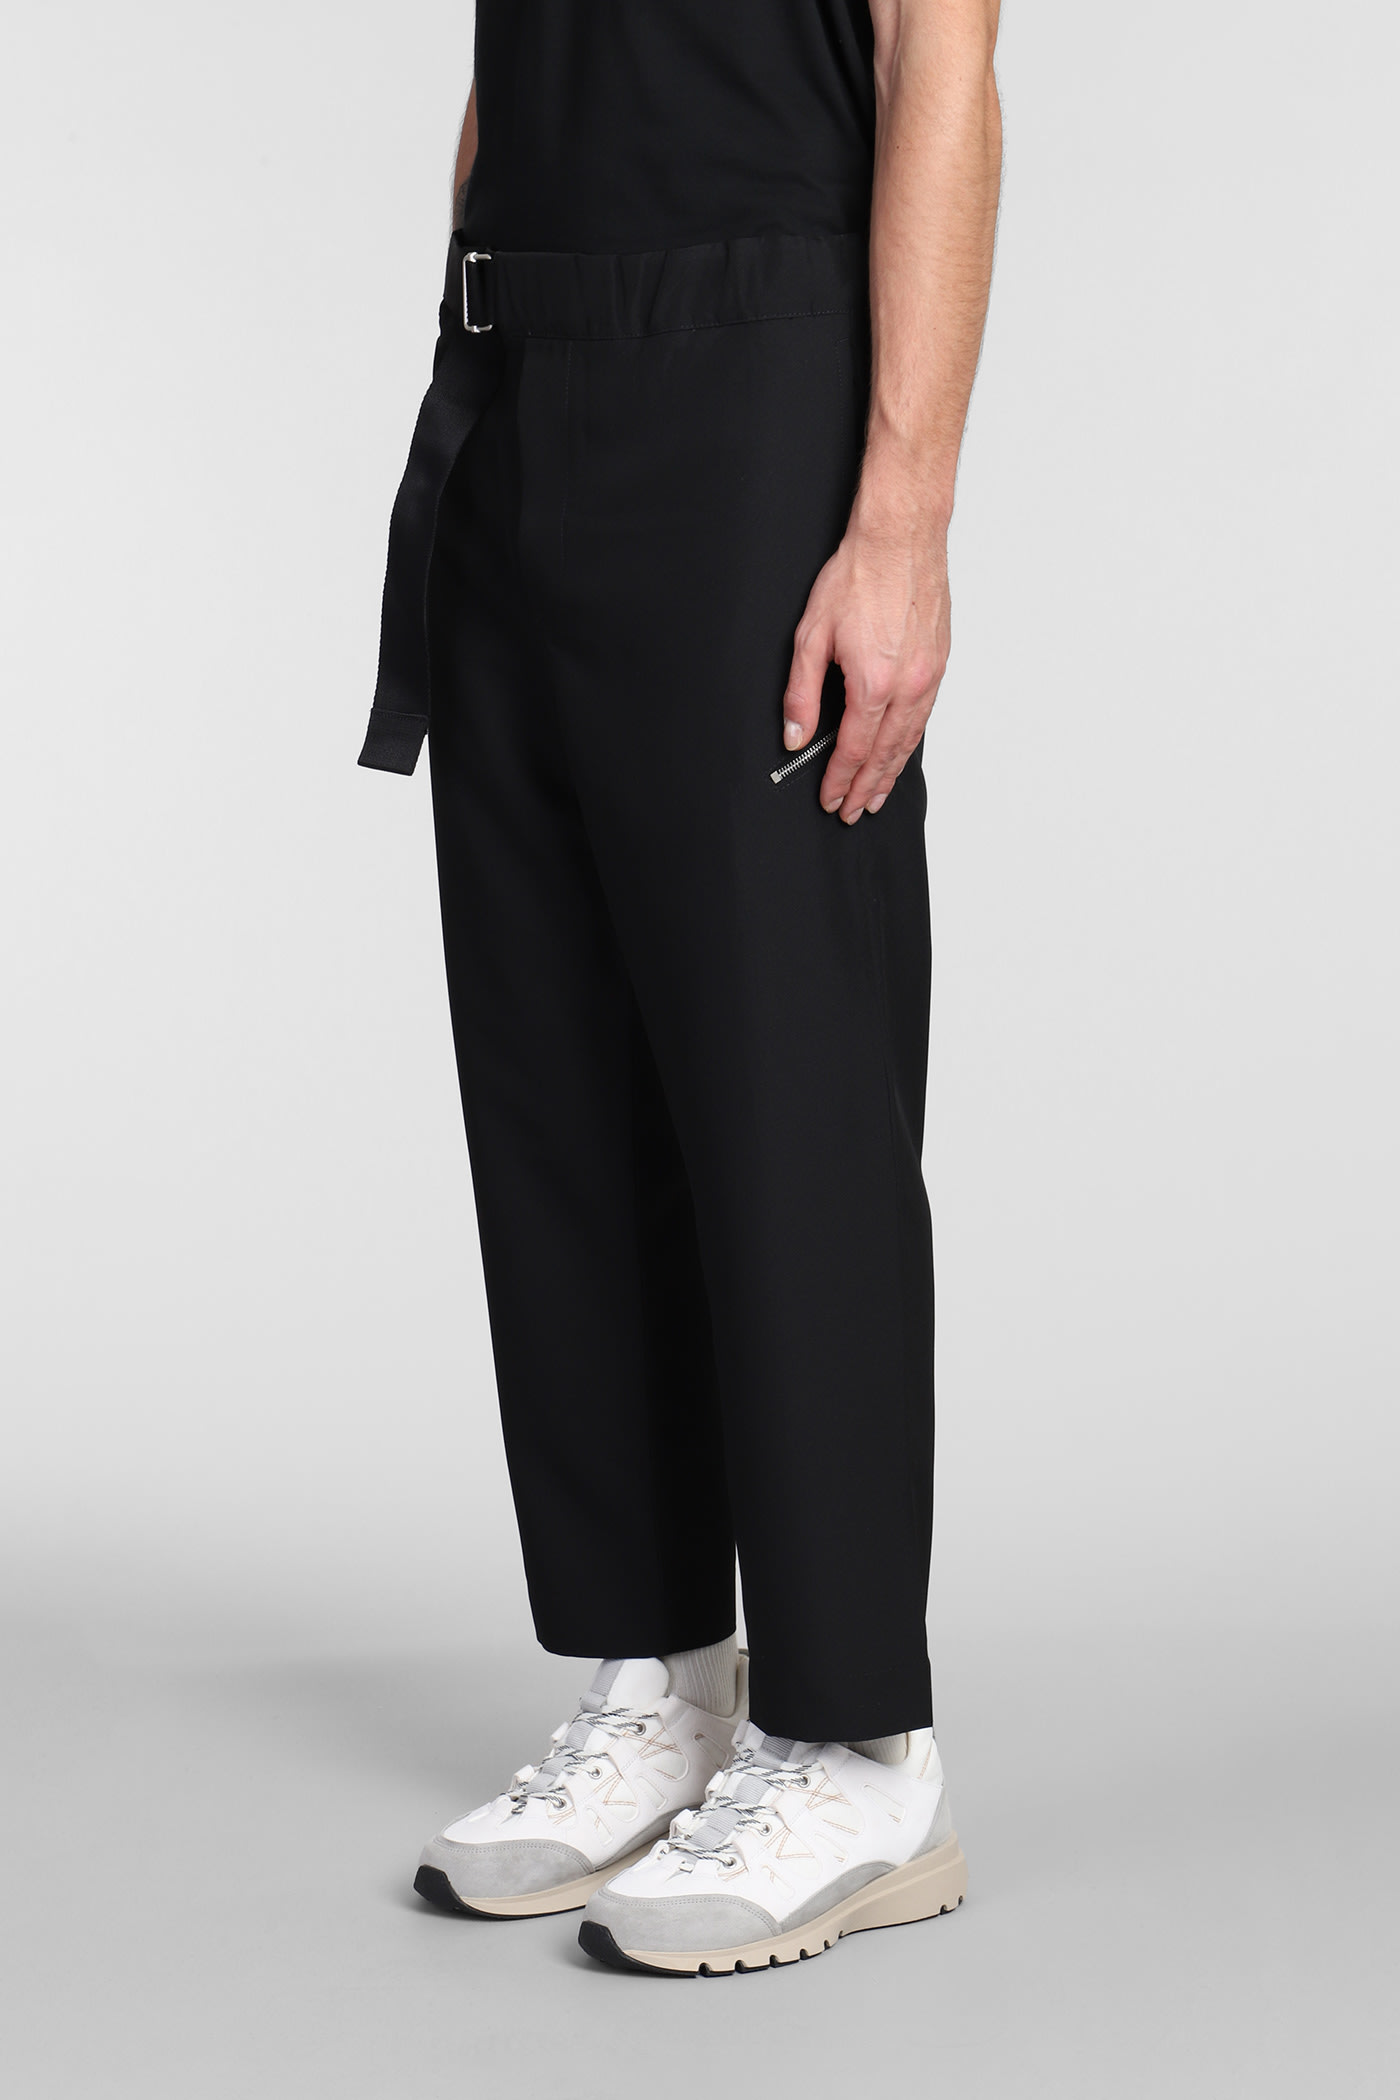 OAMC Regs Pants In Black Polyester | italist